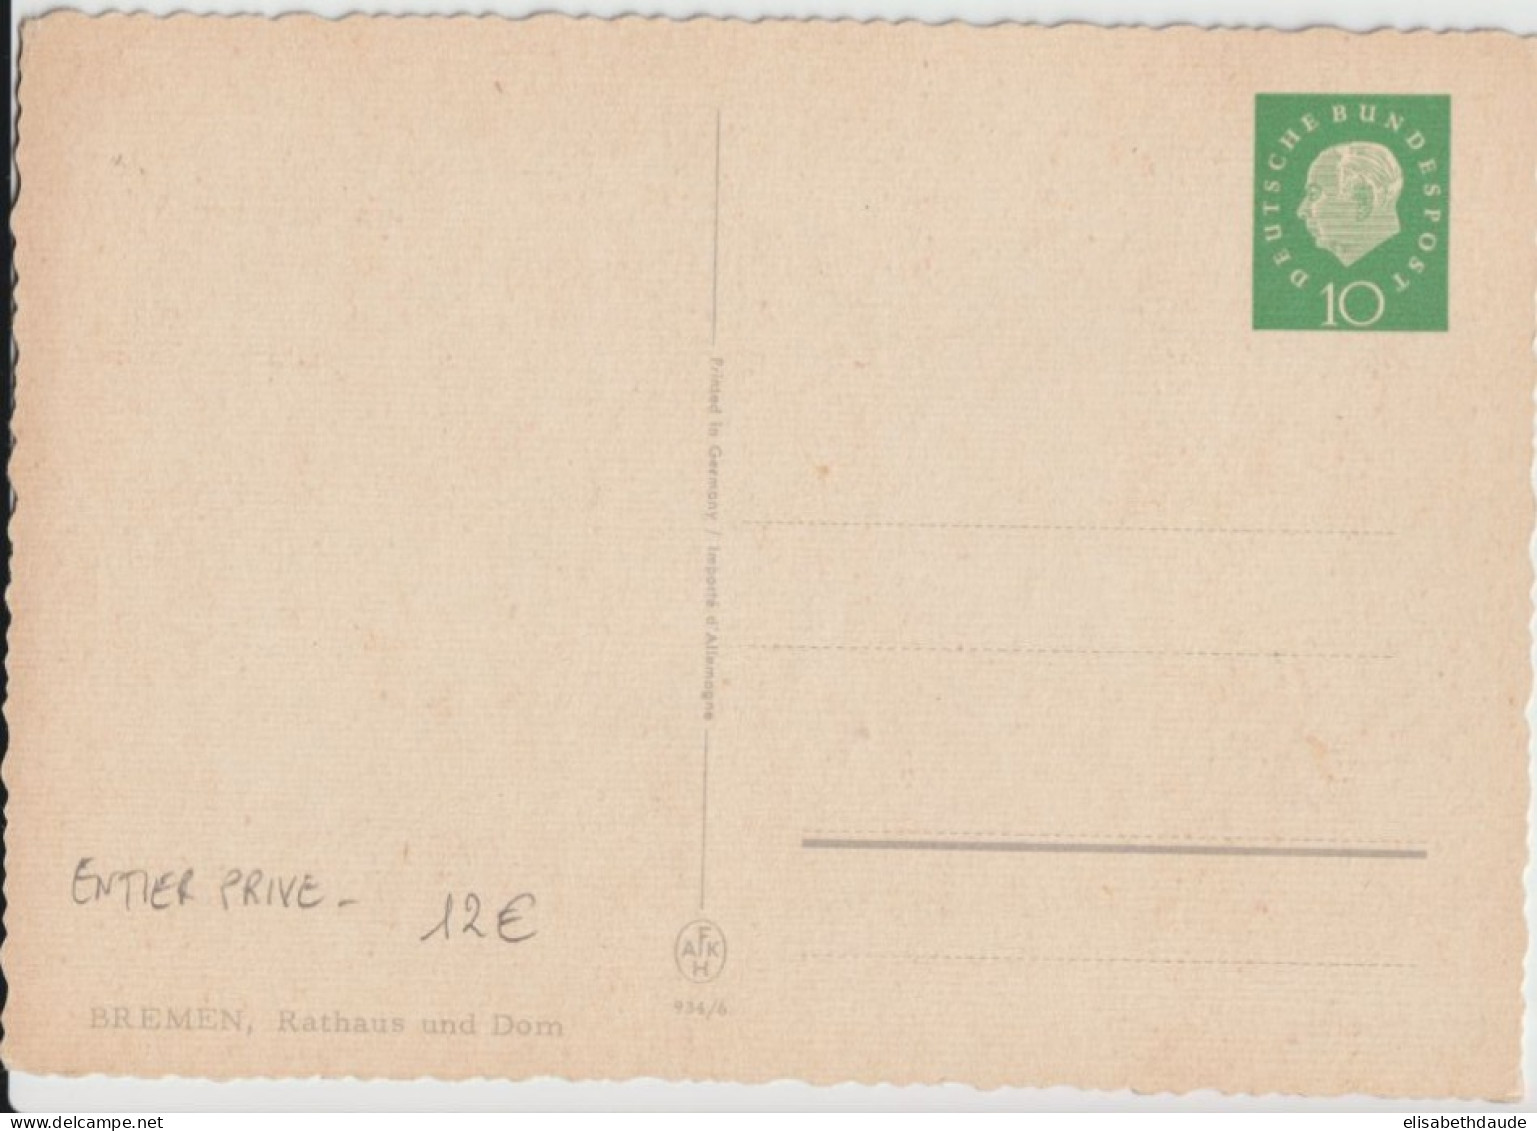 BRD - 1959 - CARTE ENTIER PRIVEE ILLUSTREE AU DOS (BREMEN) NEUVE ! - Cartes Postales - Neuves